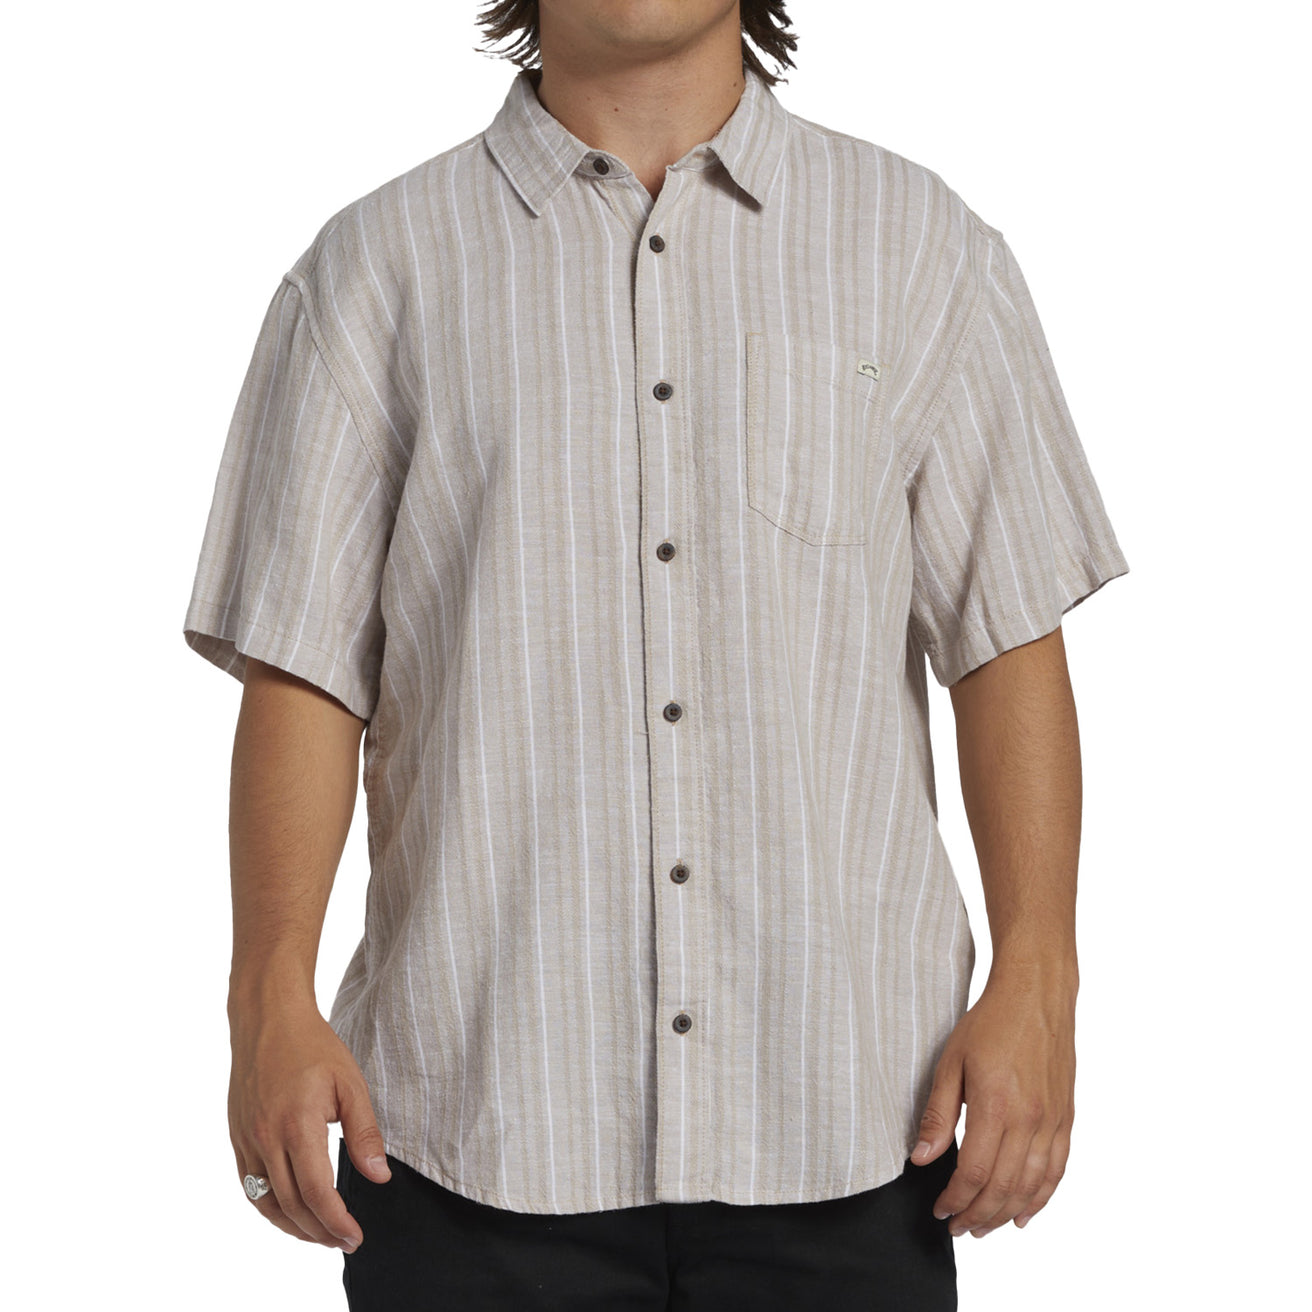 Billabong | Shirt All Day Stripe - Stone